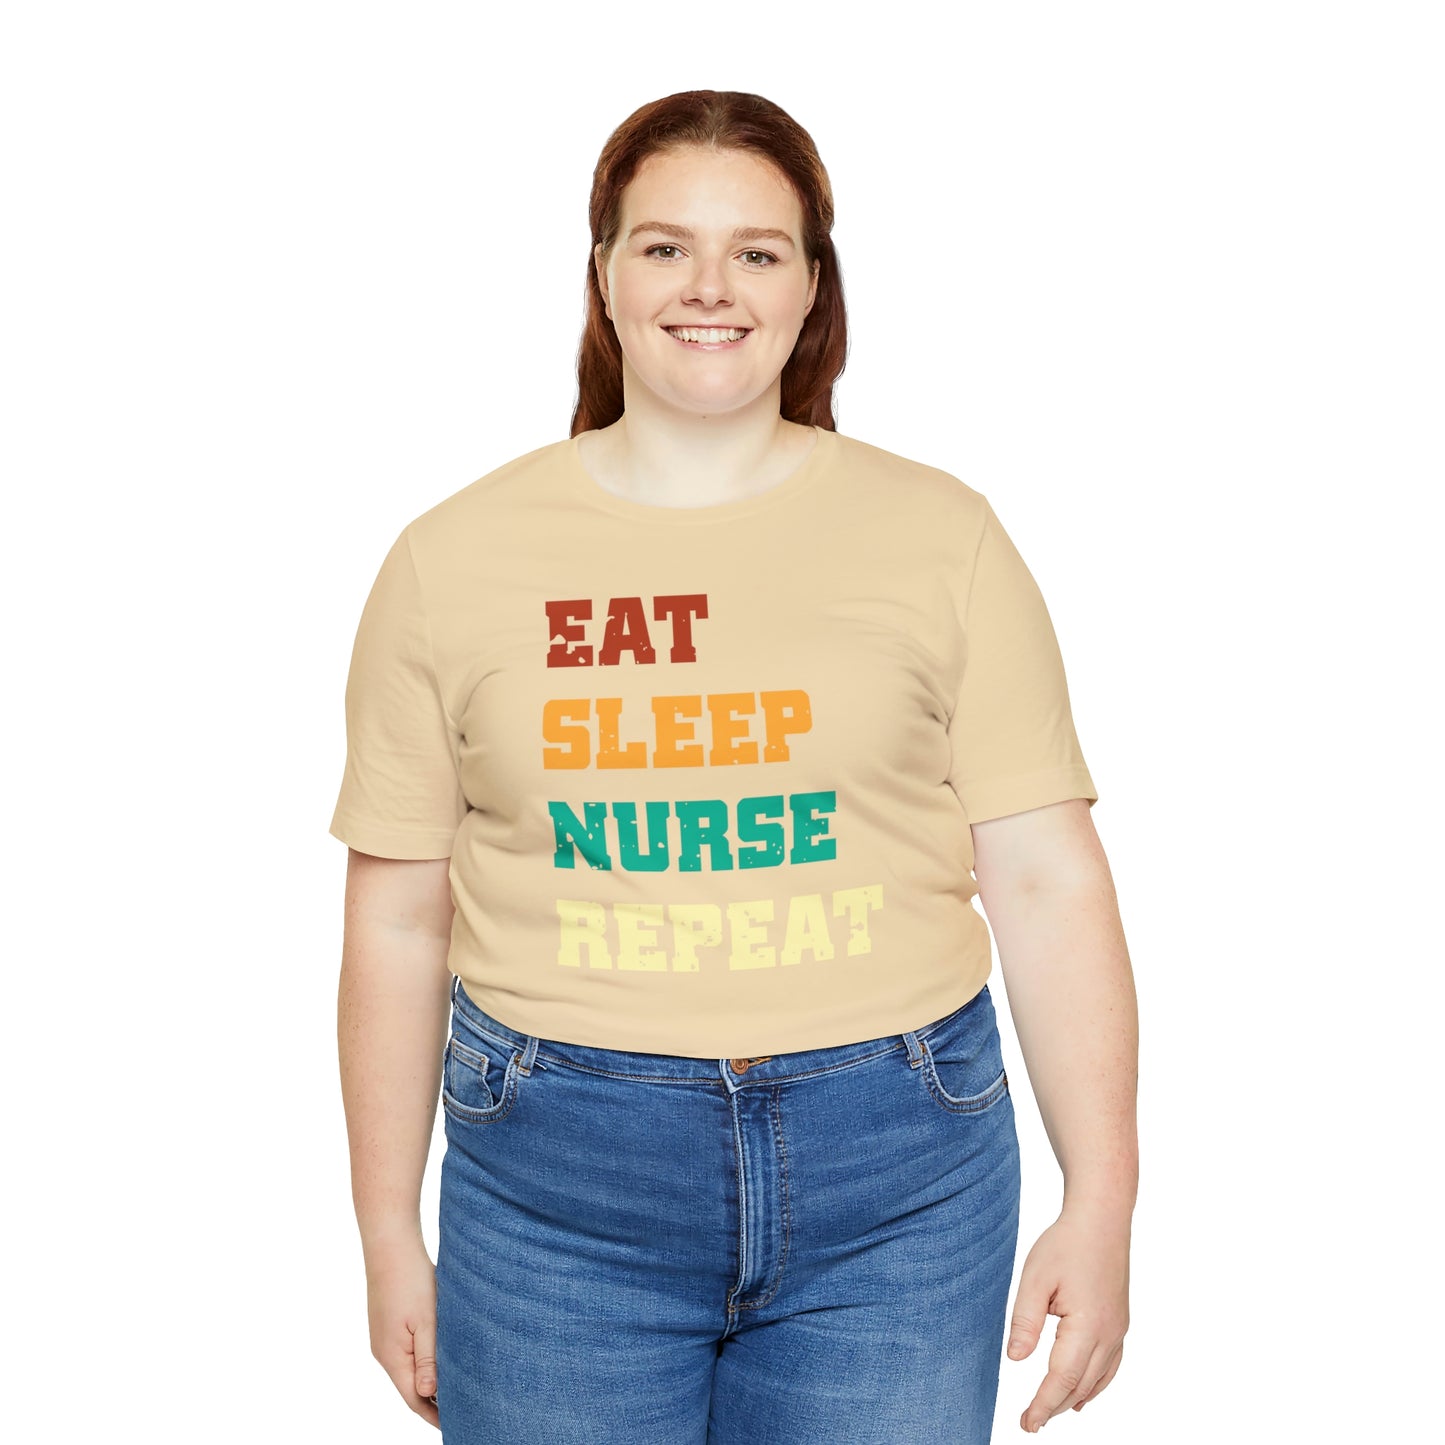 Eat Sleep Nurse Repeat, Unisex T-shirt, Mothers Day, Fathers Day, Nurse, Nursing, Healthcare Gift